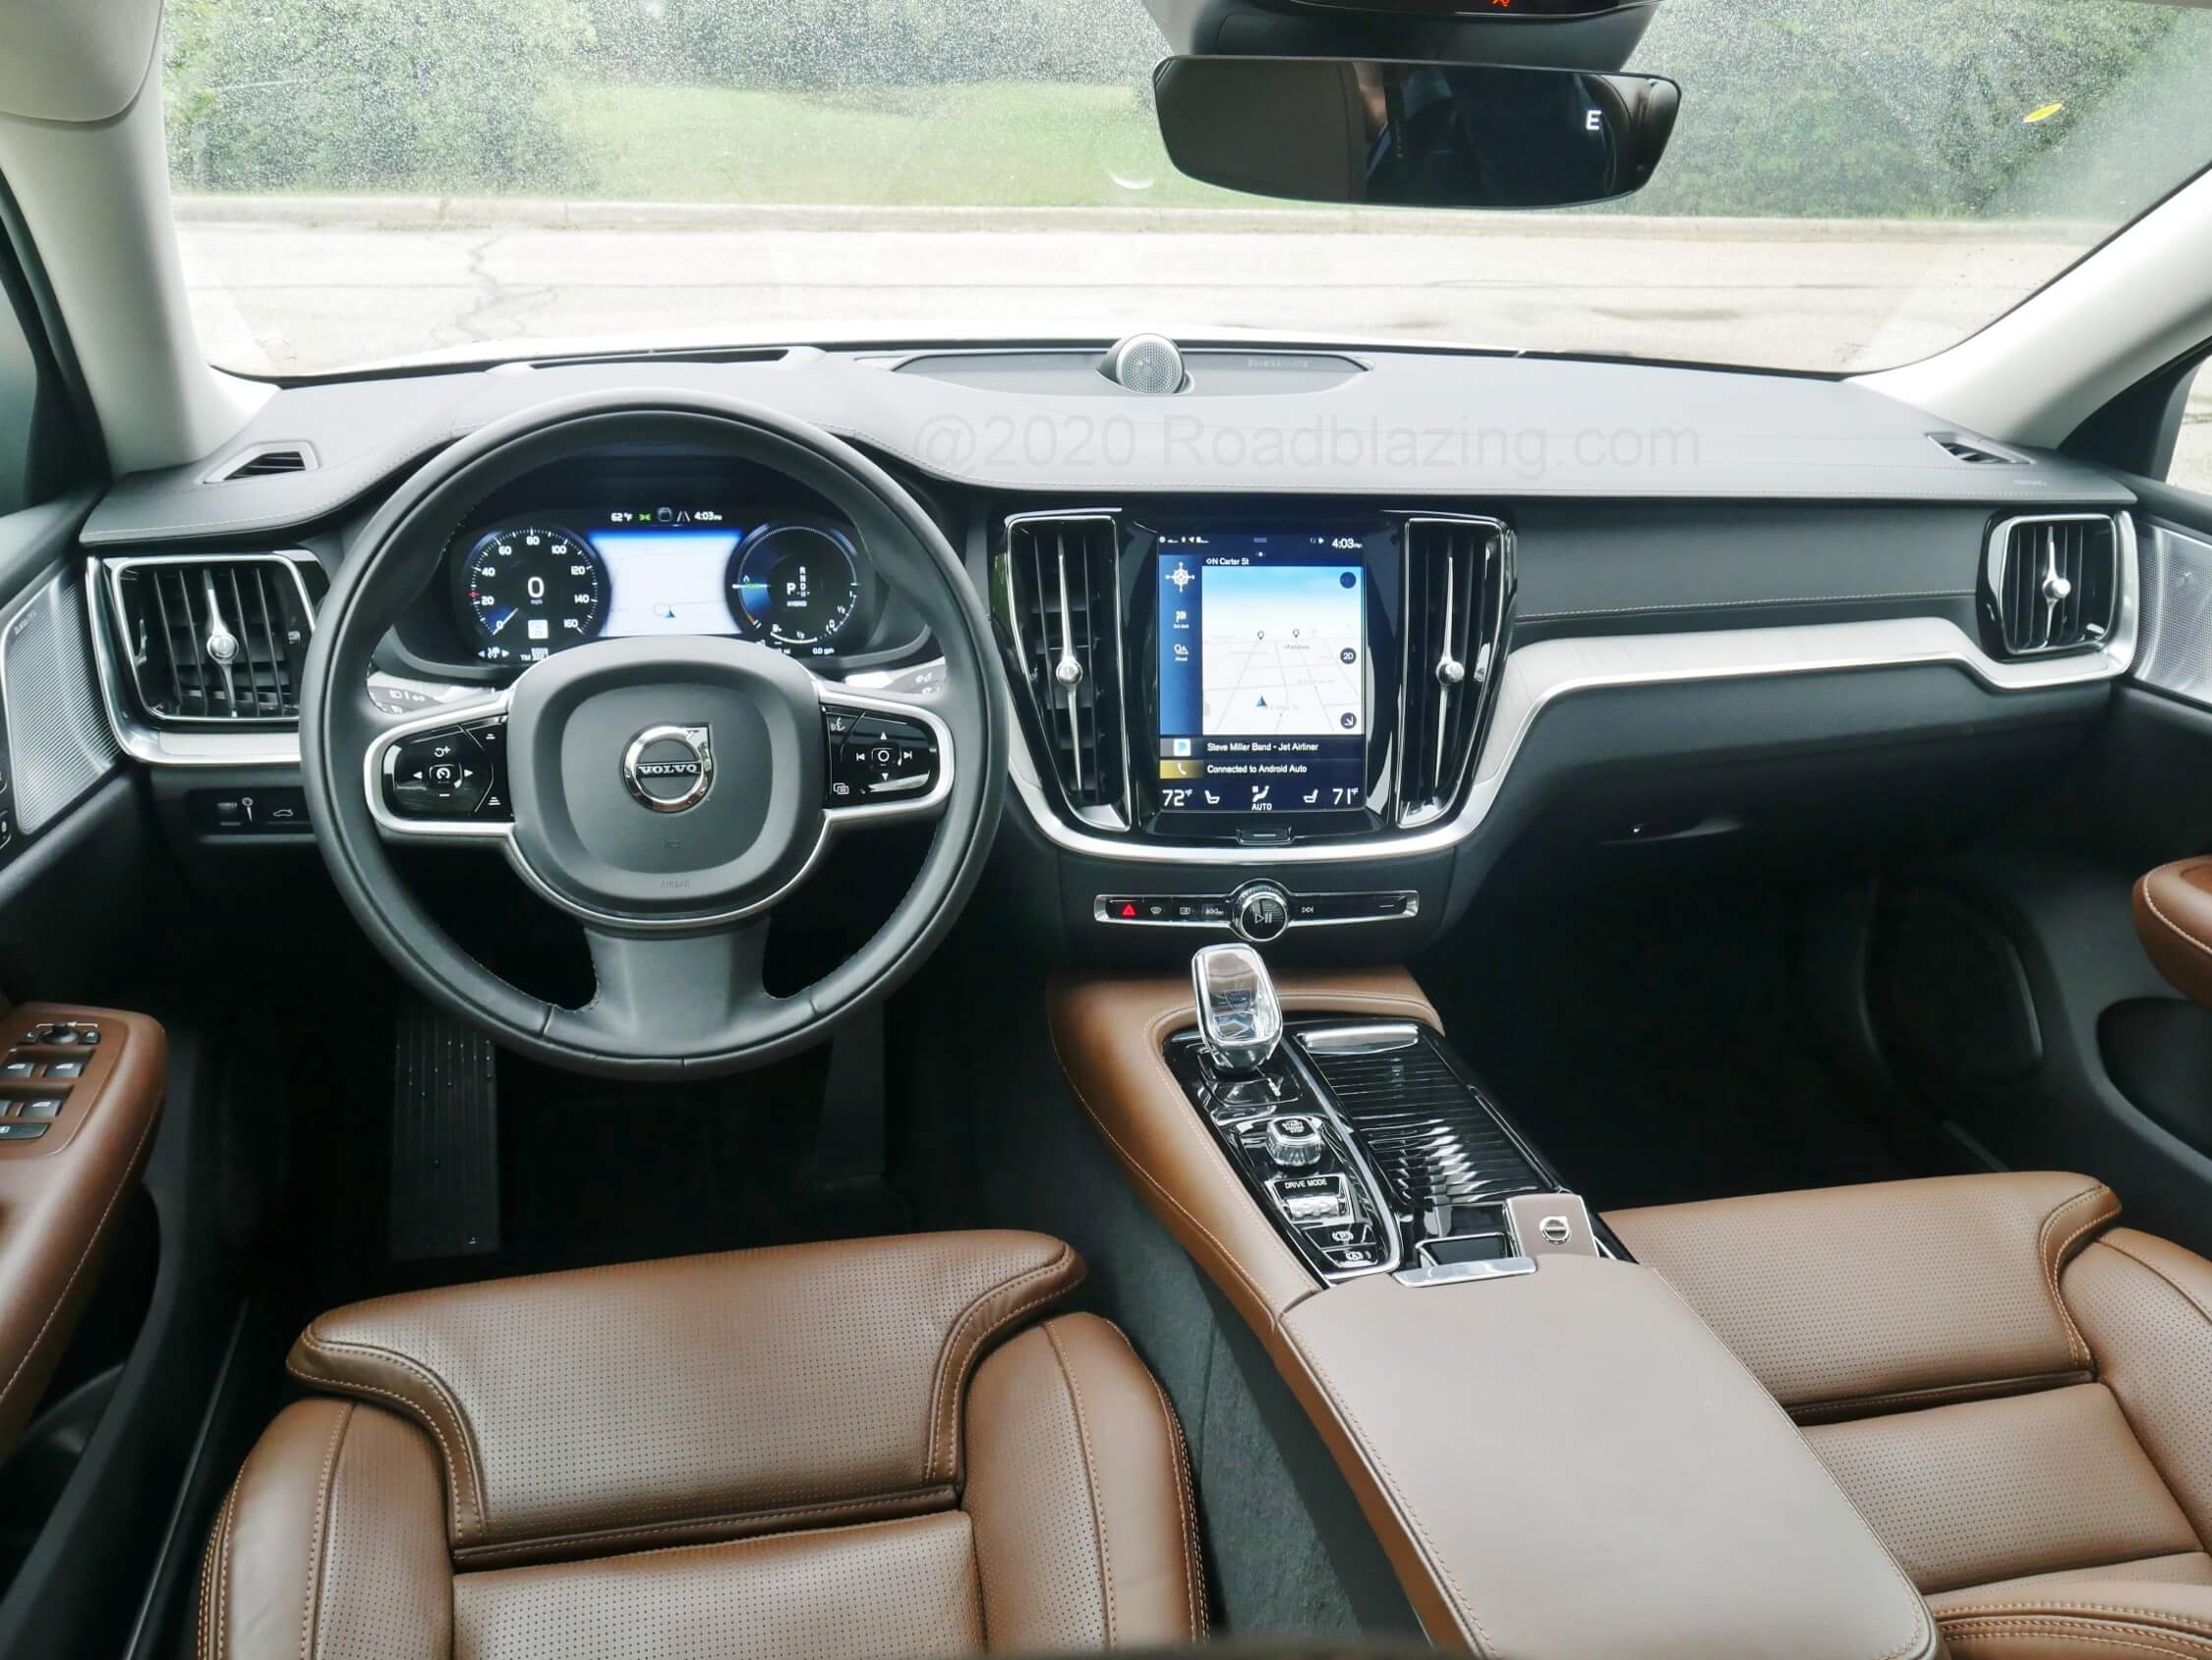 2020 Volvo S60 T8 AWD PHEV: Sensus displays duplicate portrait navigation map in instrument cluster